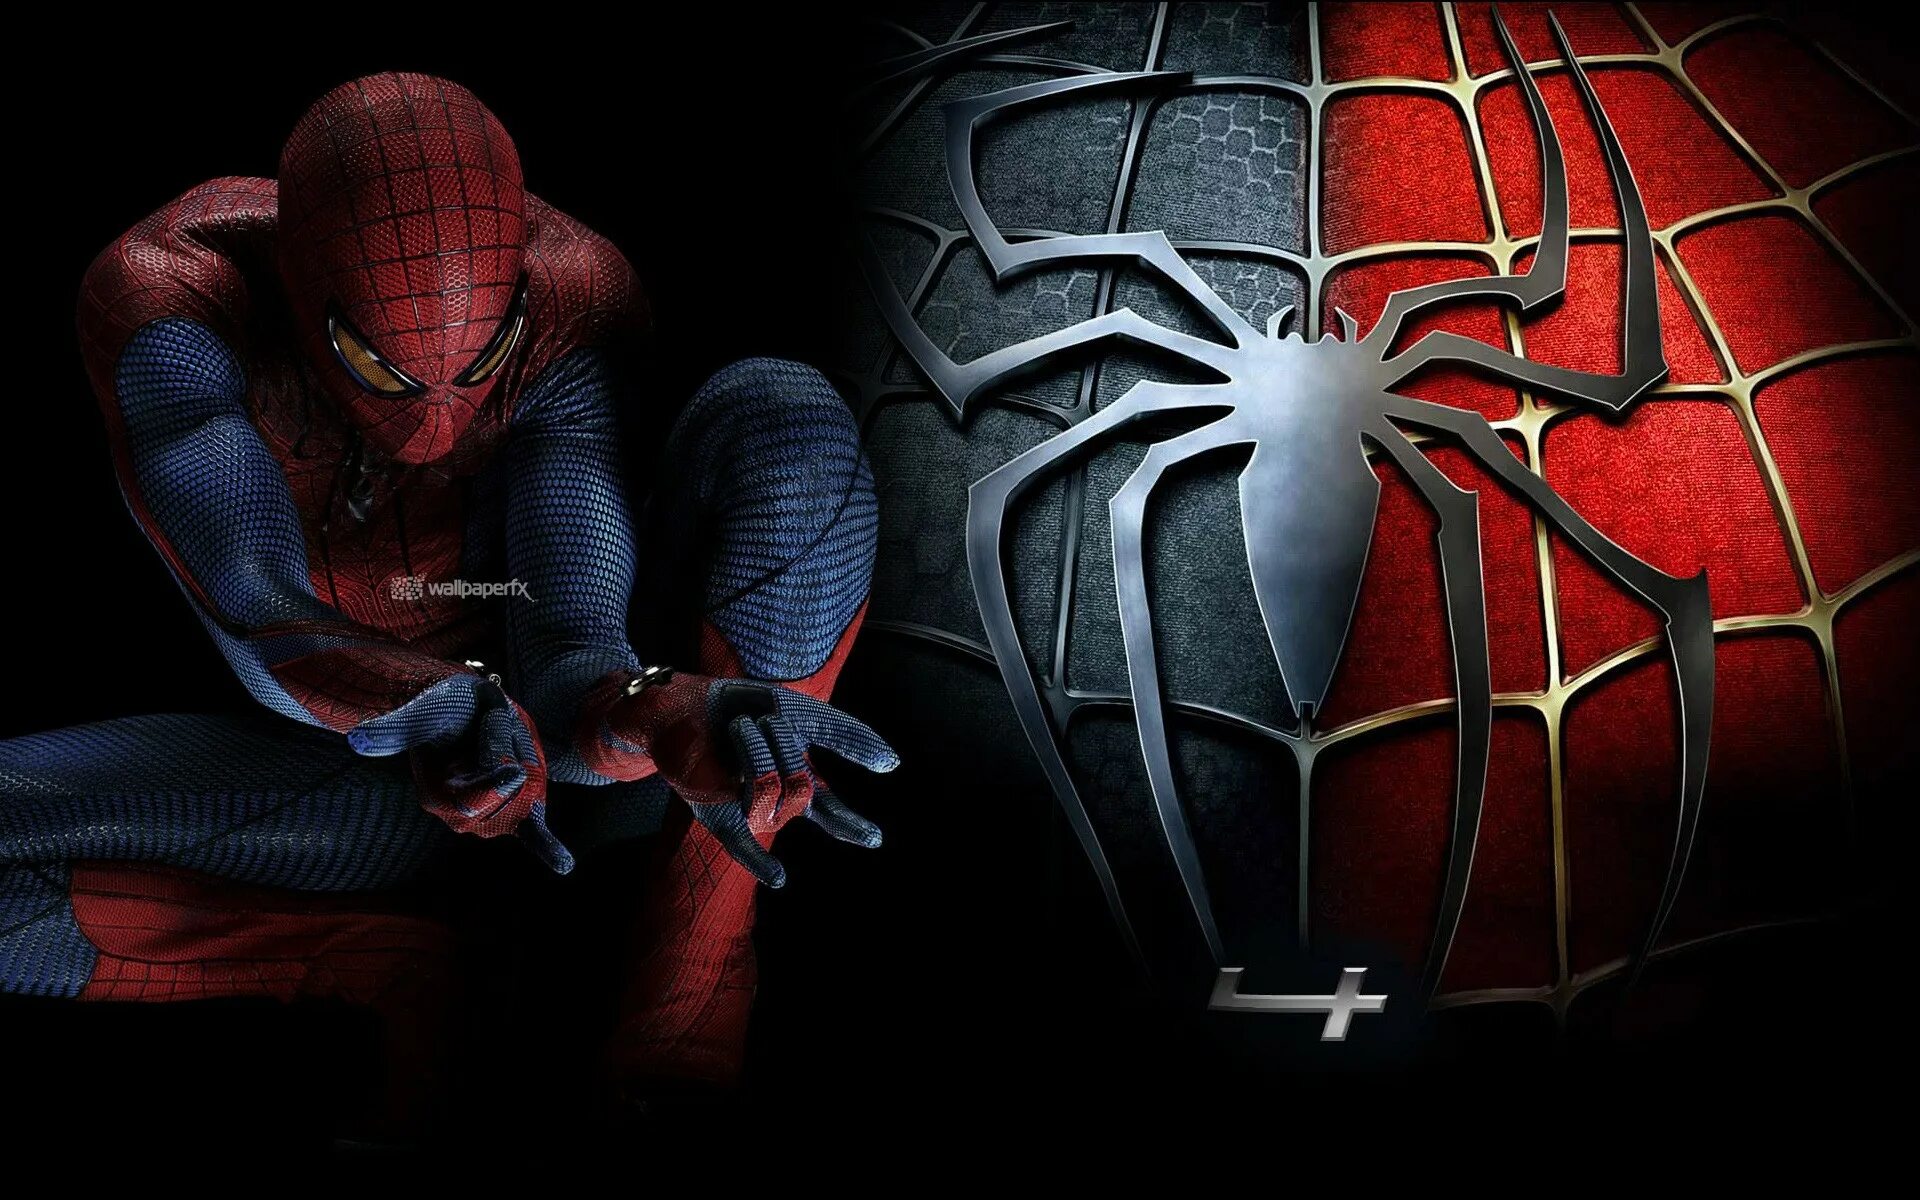 Spider man 4. Человек паук 4 фильм. Спайдер Мэн на а4. Человек паук человек паук человек паук.